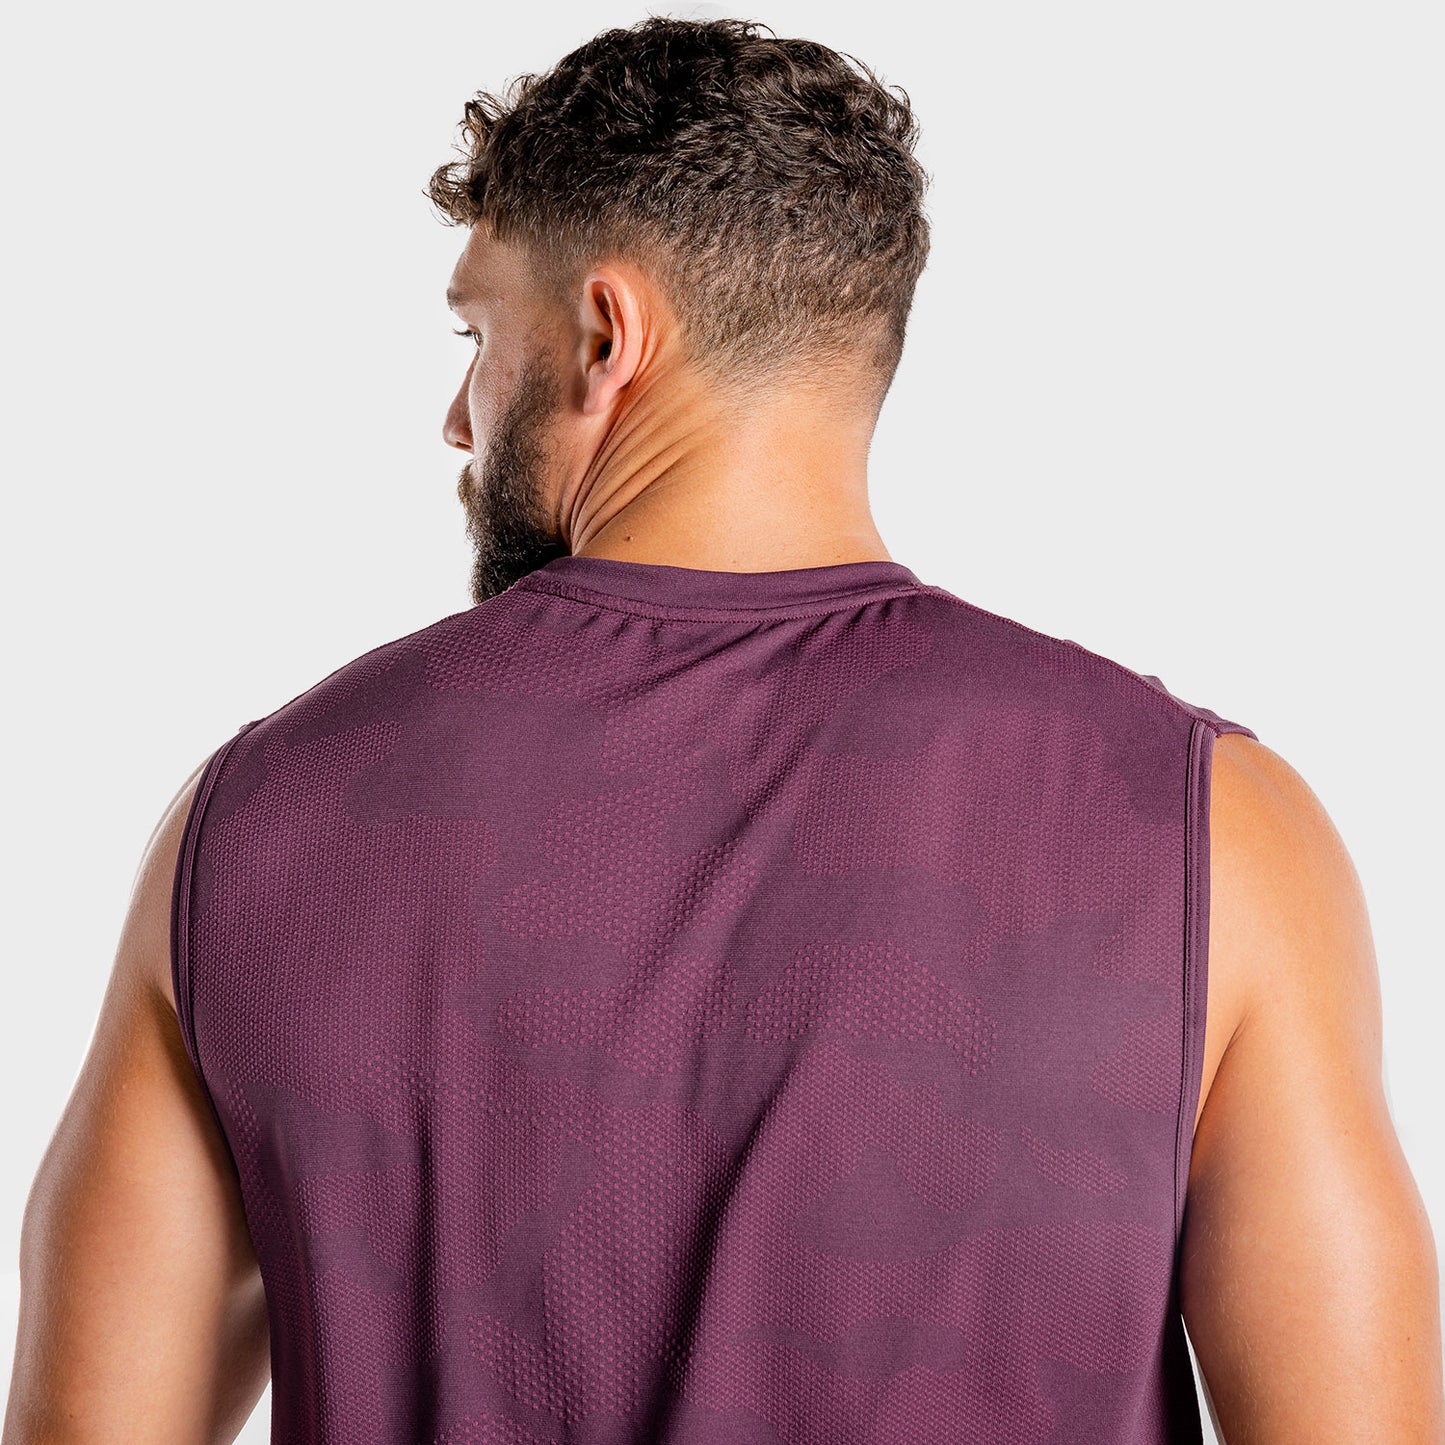 squatwolf-gym-wear-wolf-seamless-tank-purple-workout-tank-tops-for-men